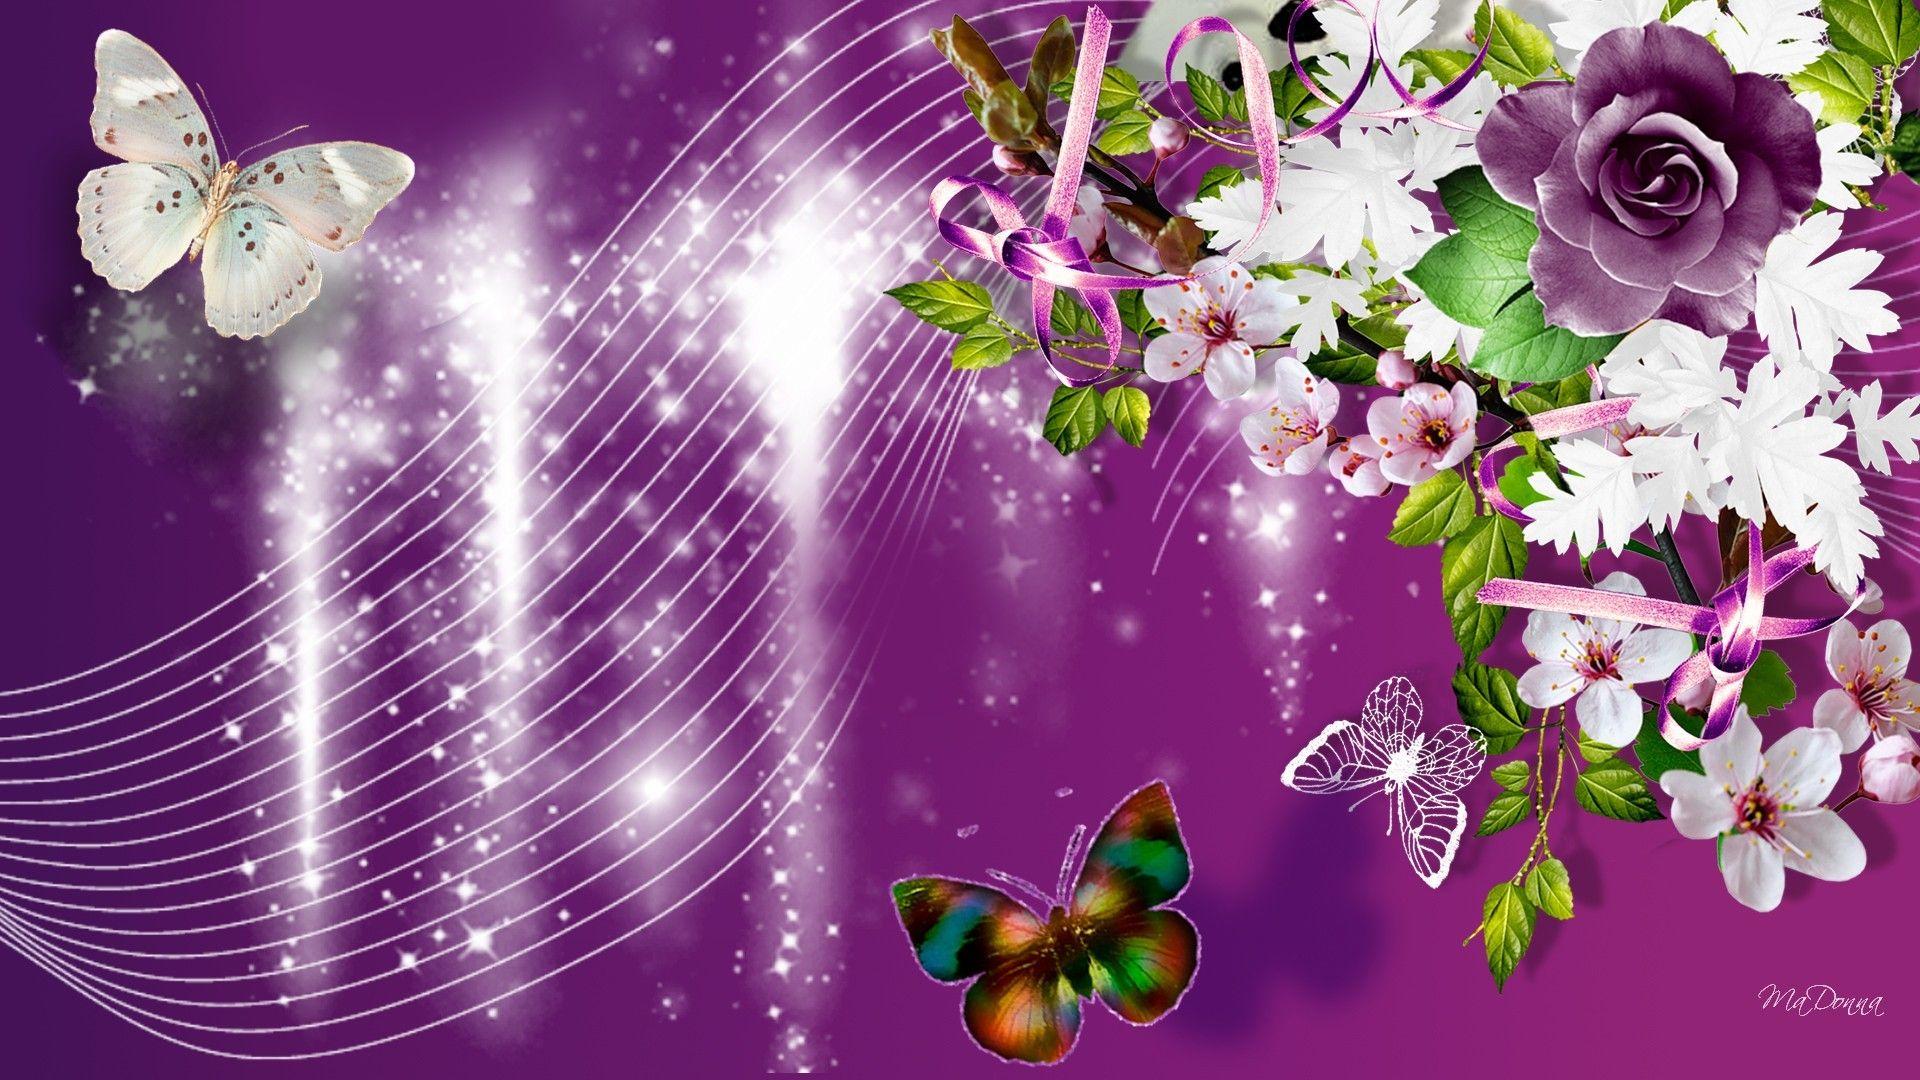 Perfume Tag wallpaper: Balloon Purple Haze Lavenders Colorful